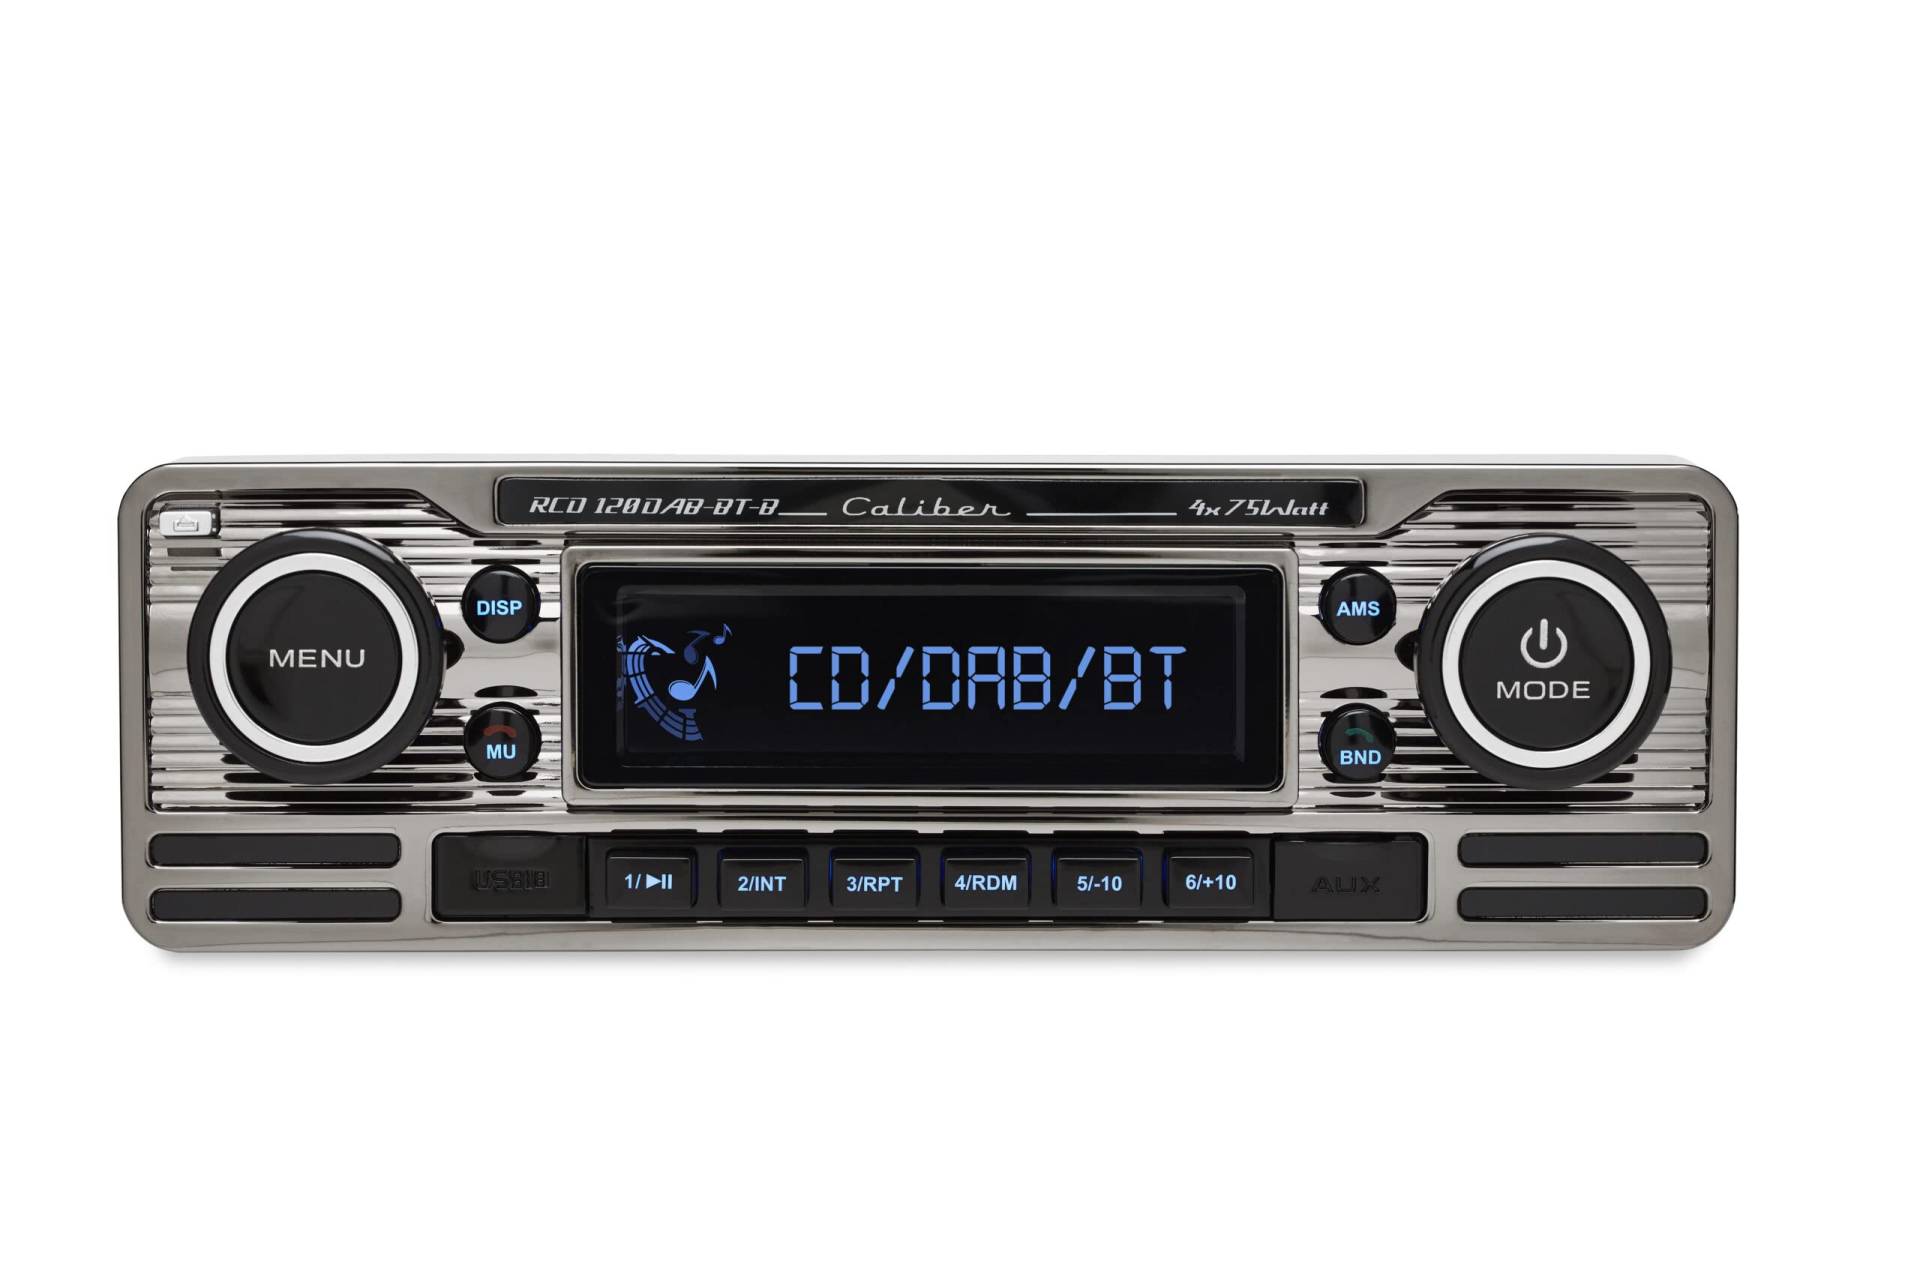 Caliber Retro Autoradio - Auto Radio Bluetooth USB - DAB+ / FM - 1 DIN Radio Auto - Retro Design - Mit Freisprechfunktion - Schwarz von Caliber